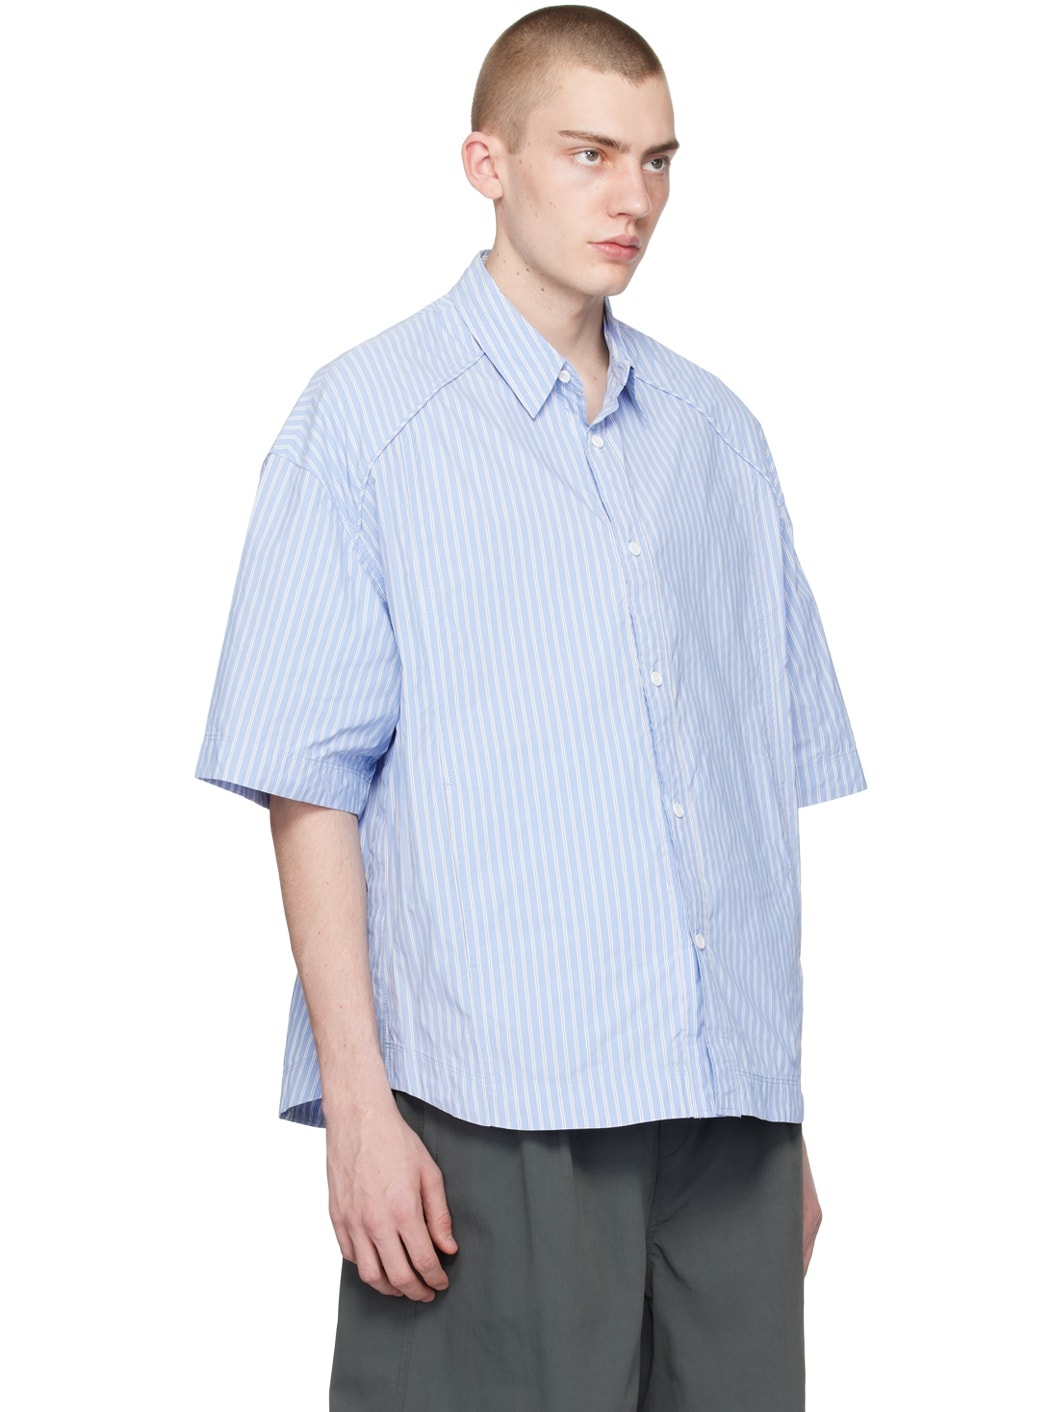 Blue & White Stripe Shirt - 2